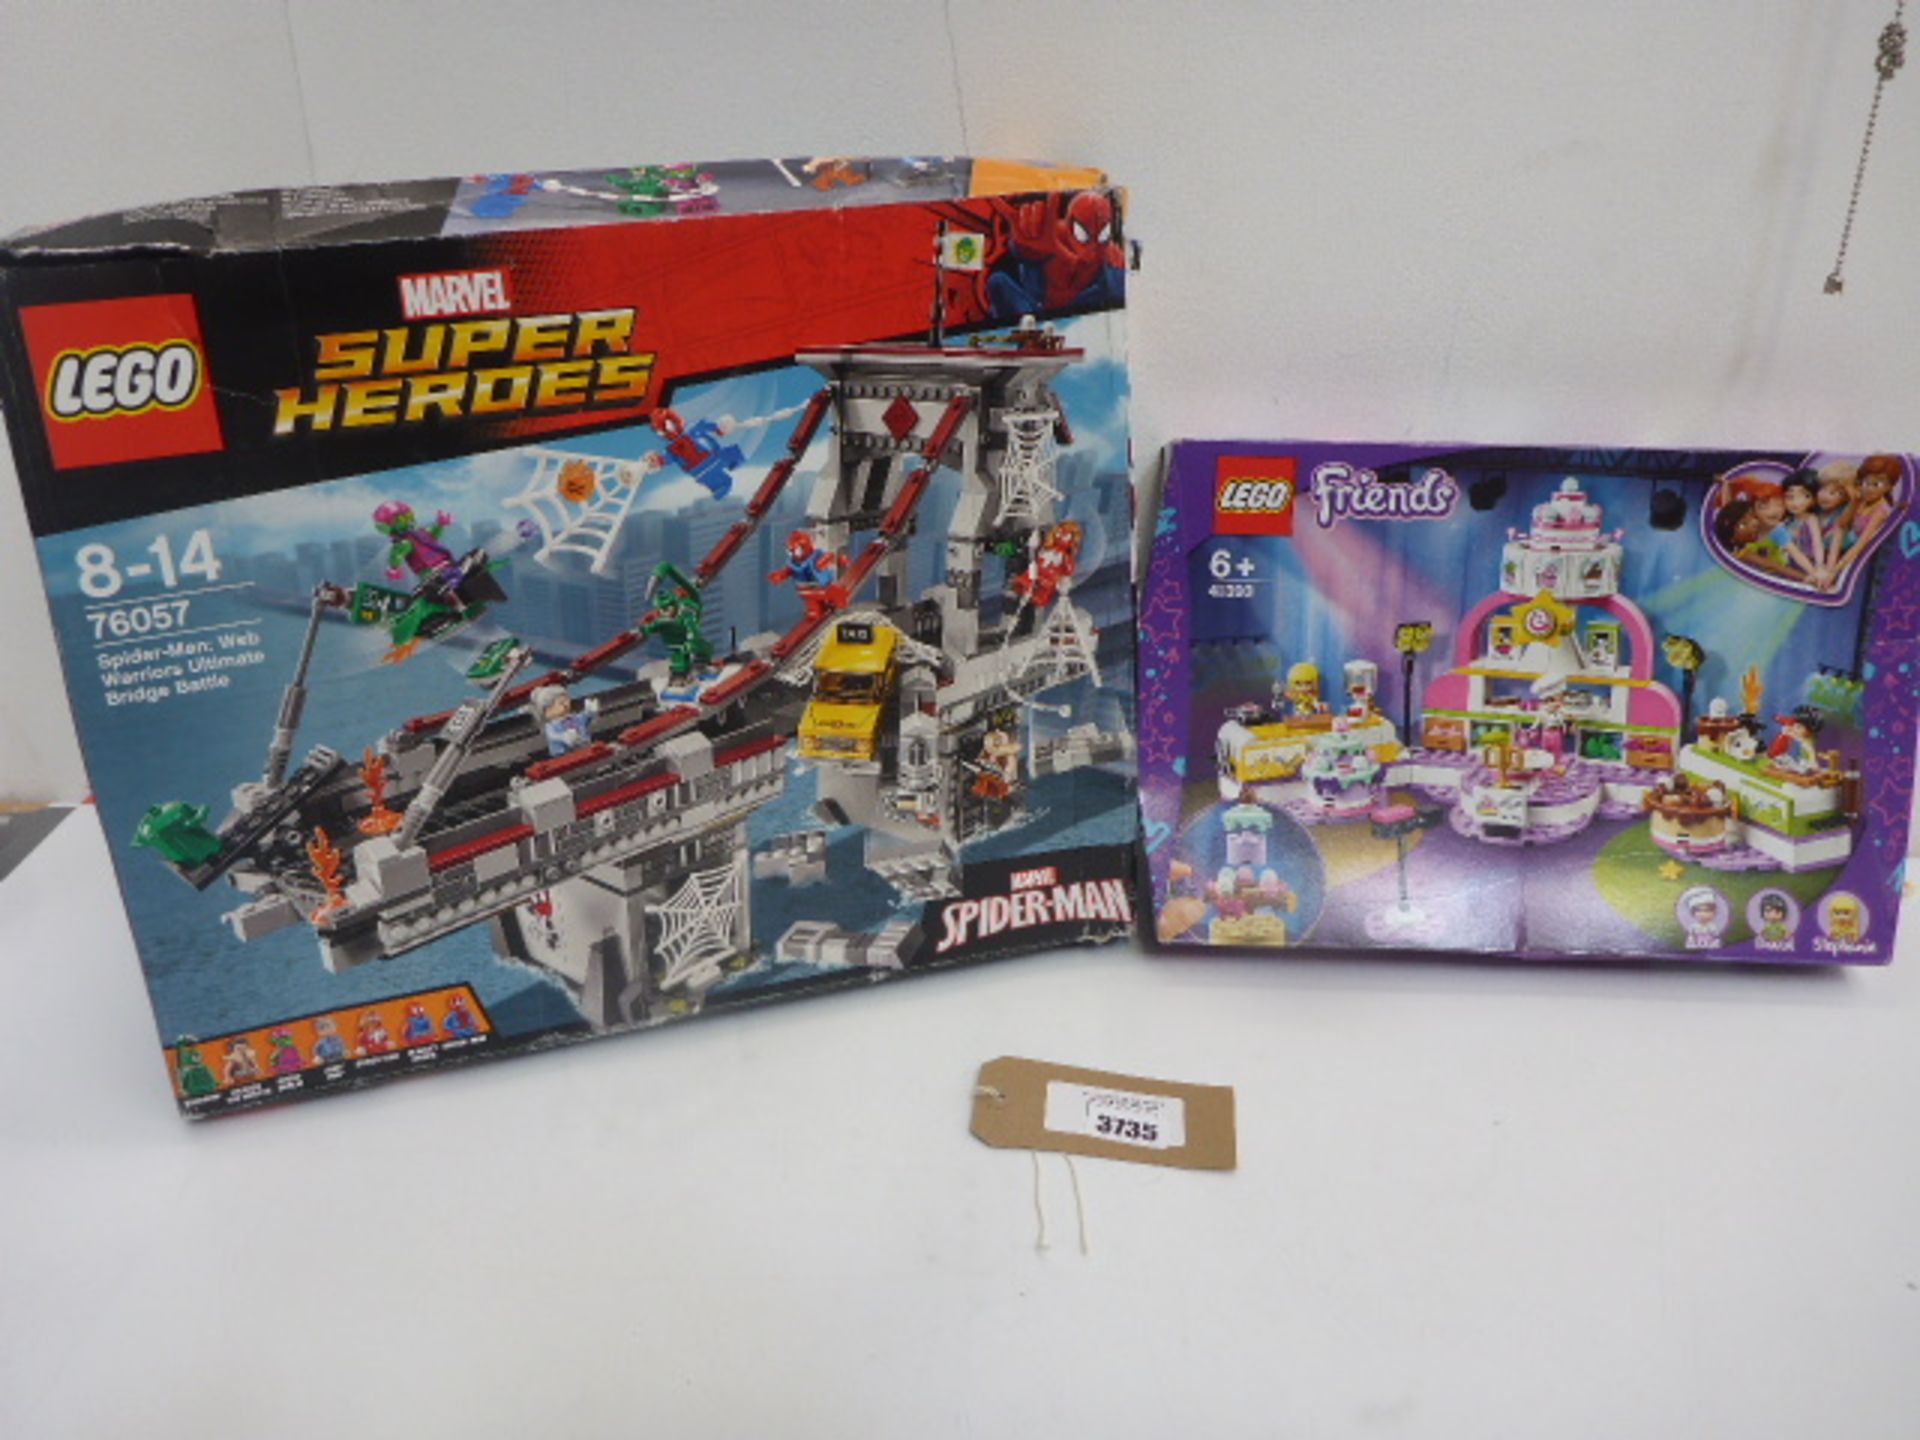 Lego 76057 Marvel Super Heros kit (opened a/f) and Lego 41393 Friends sealed kit